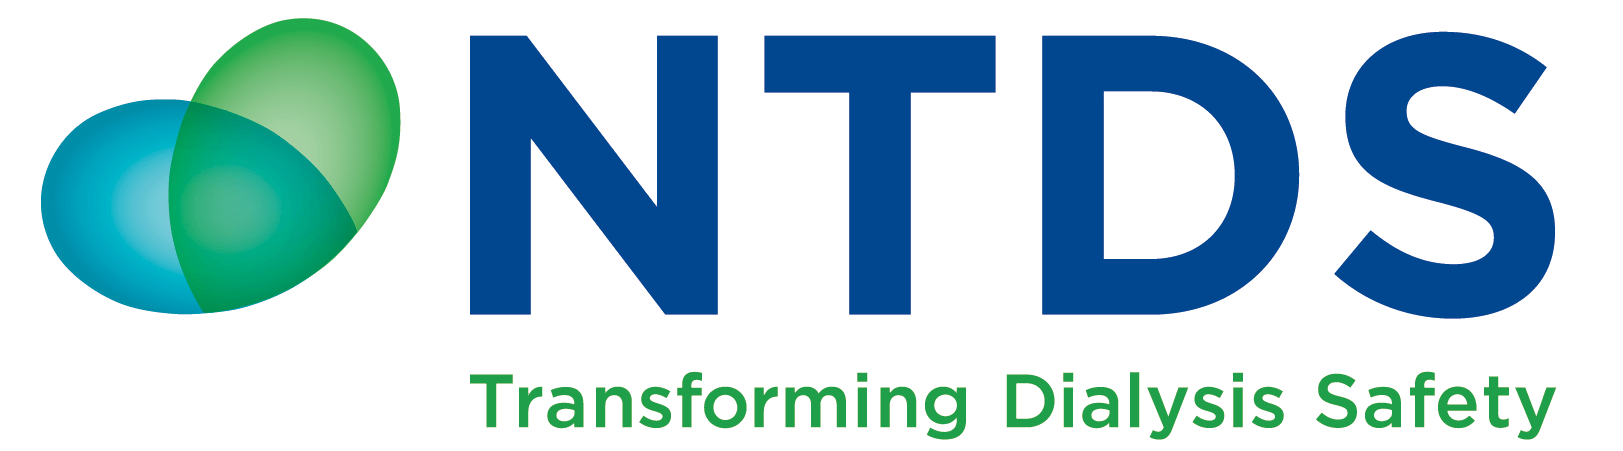 NTDS: Transforming Dialysis Safety.